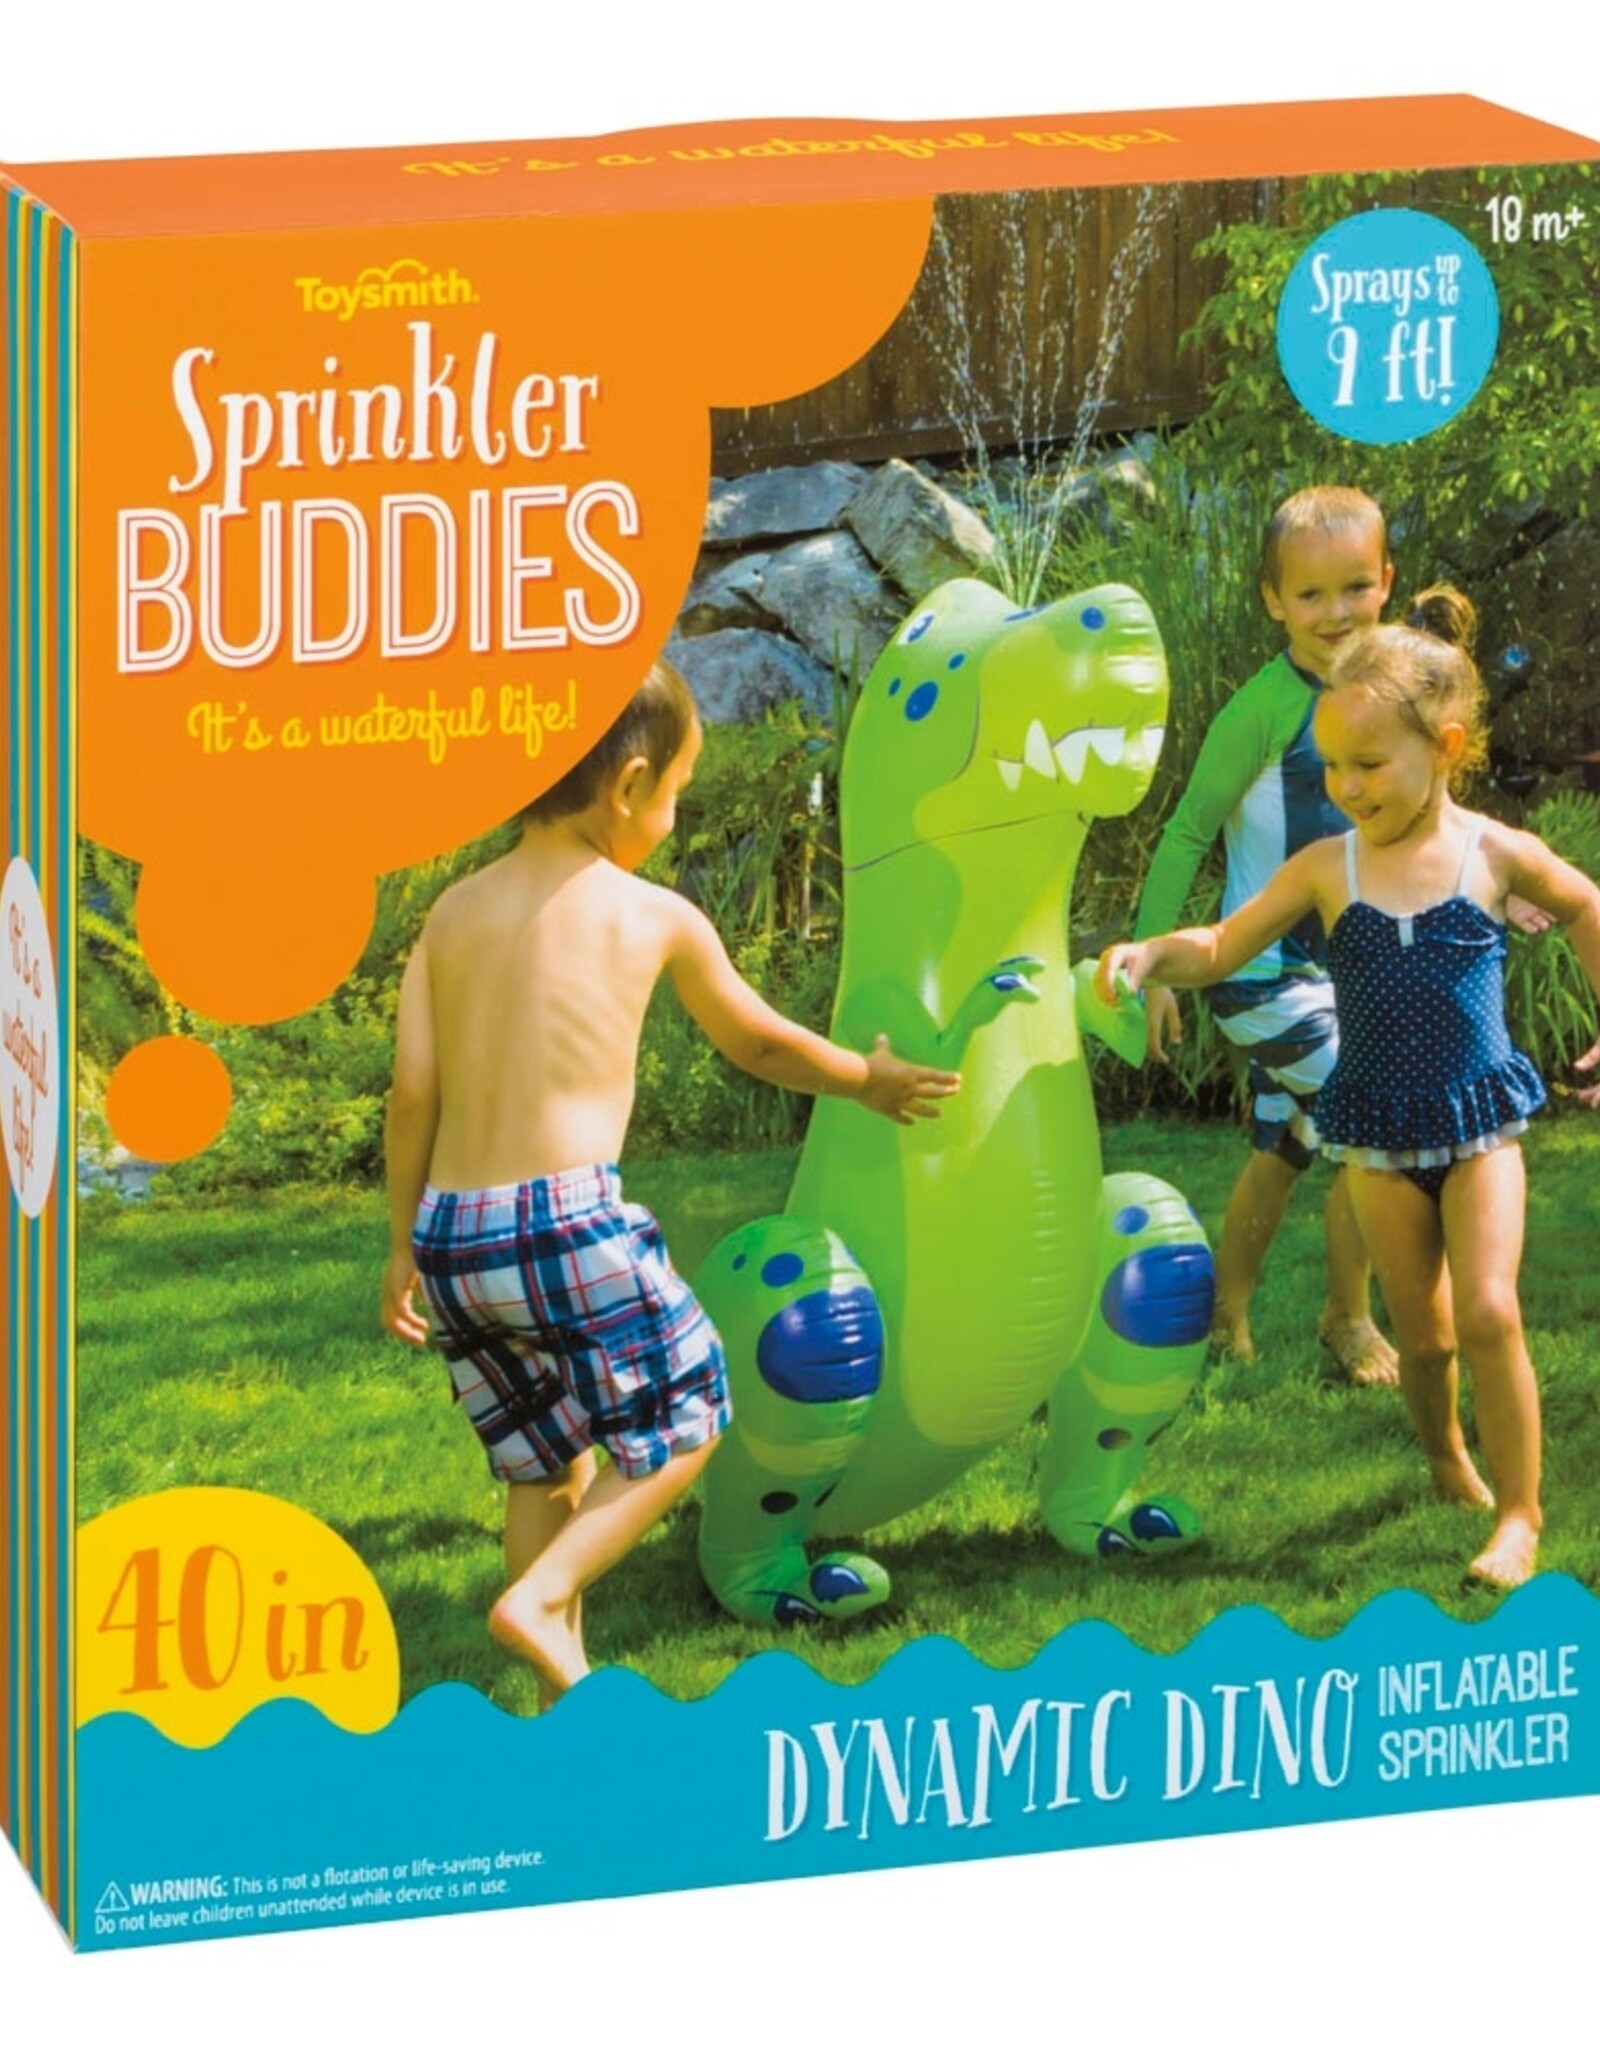 Toysmith Sprinkler Buddies Dynamic Dino Inflatable Sprinkler